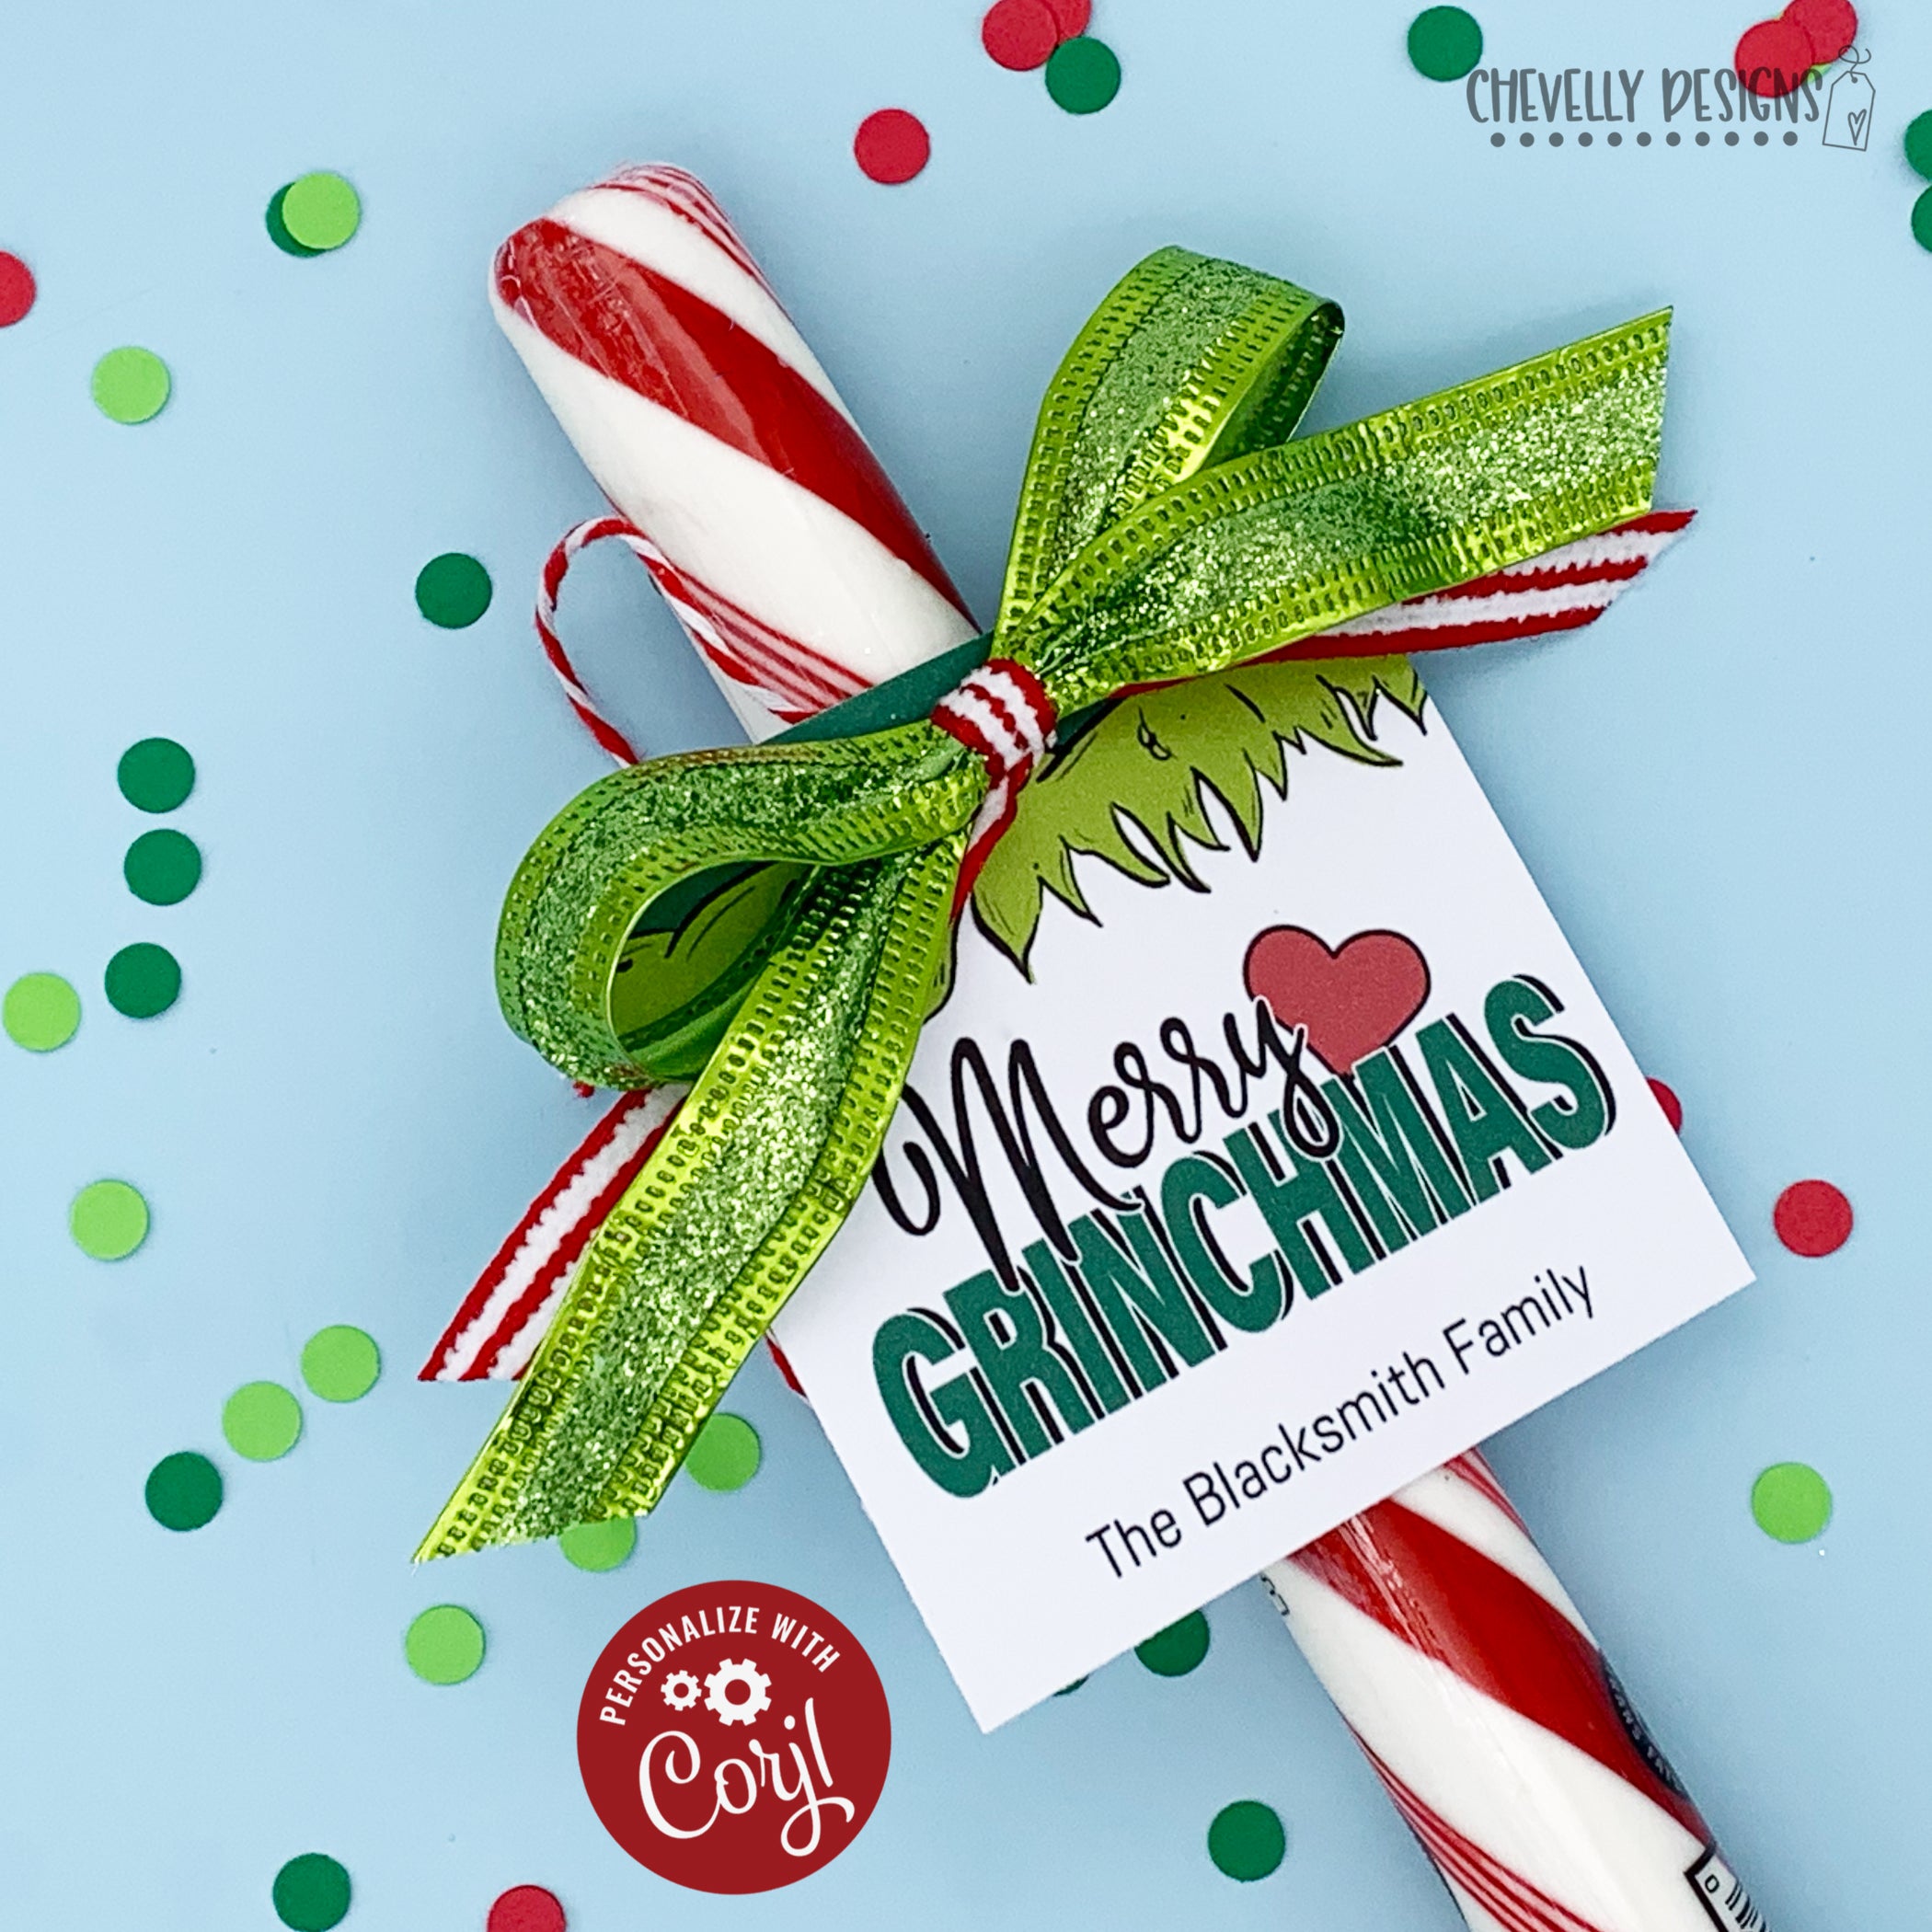 300+ Festive Printable Christmas Tags for Gift Wrapping Magic - DIY Candy